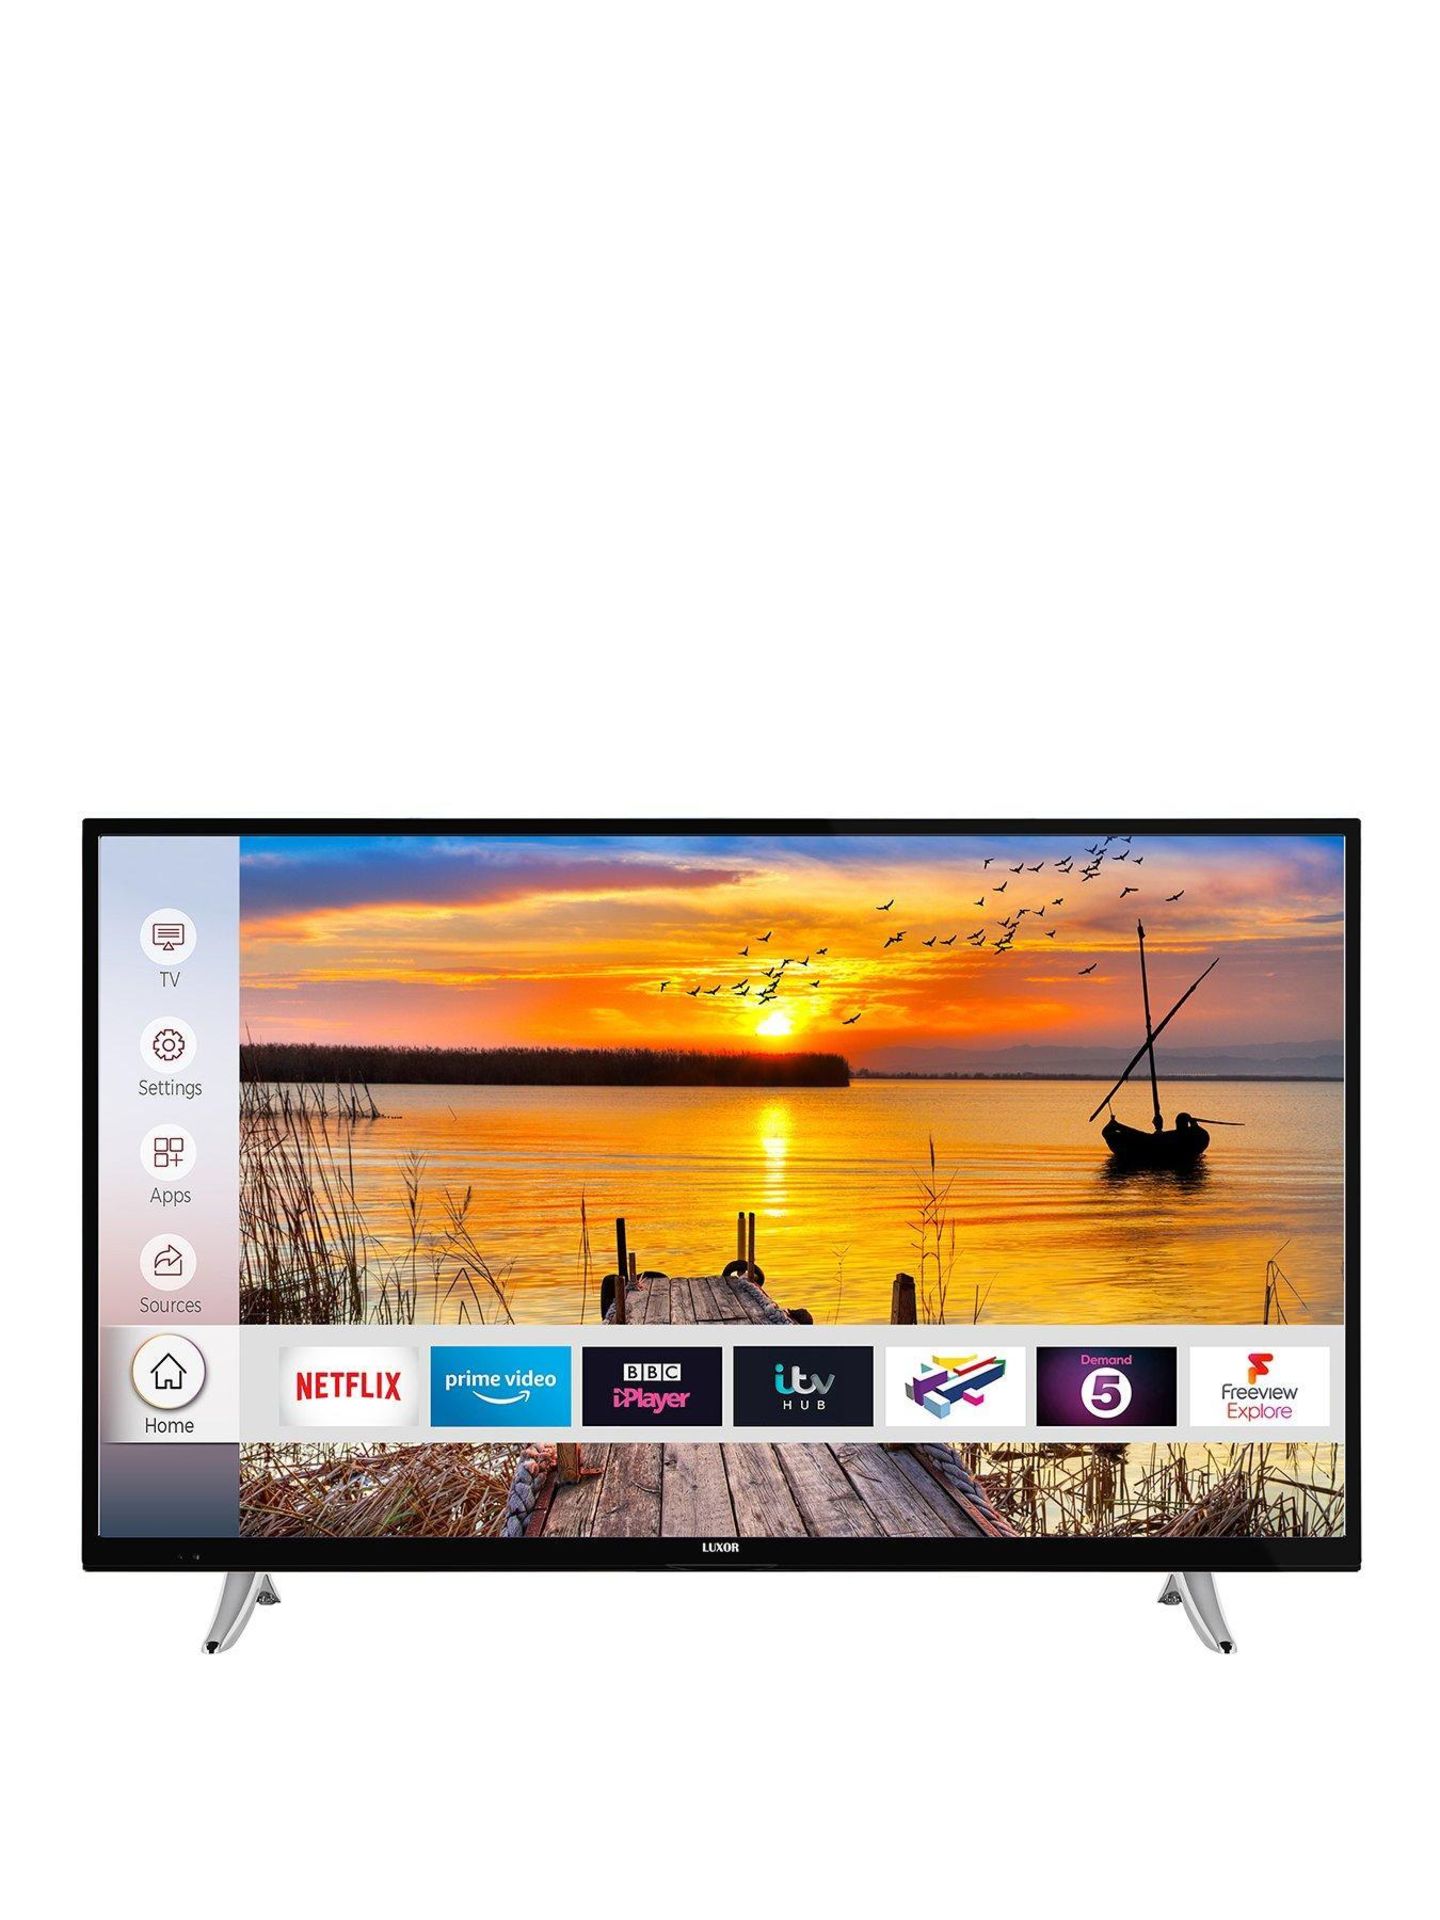 Luxor 50 inch 4k uhd, freeview play, smart tv [black] 72x113x28cm rrp: £622.0